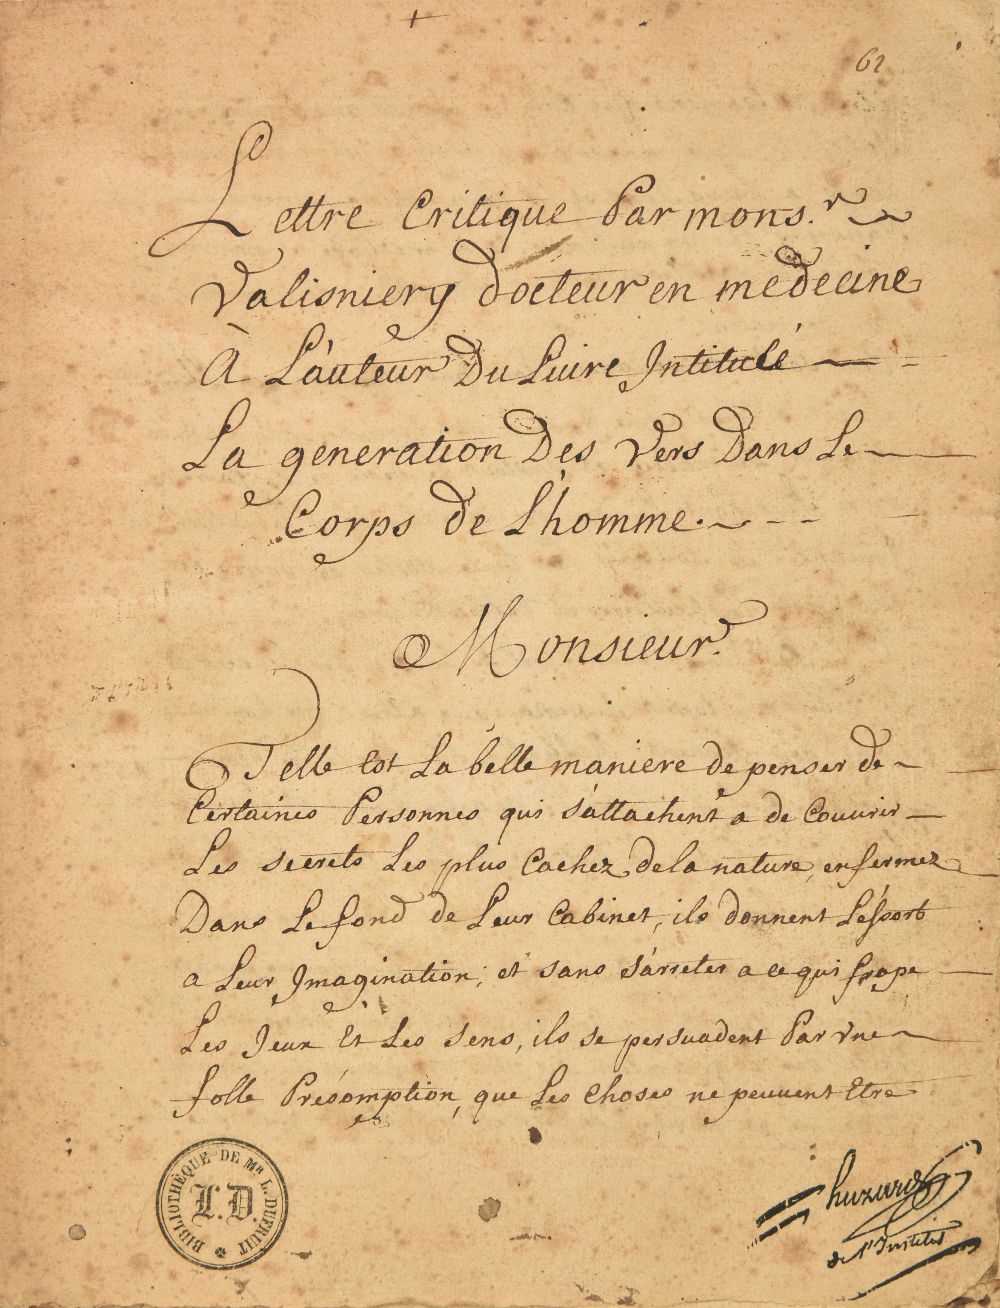 Lot 137 - Vallisnieri, (Antonio, 1661-1730). Lettre critique par monsr. Valisniery, c.1720